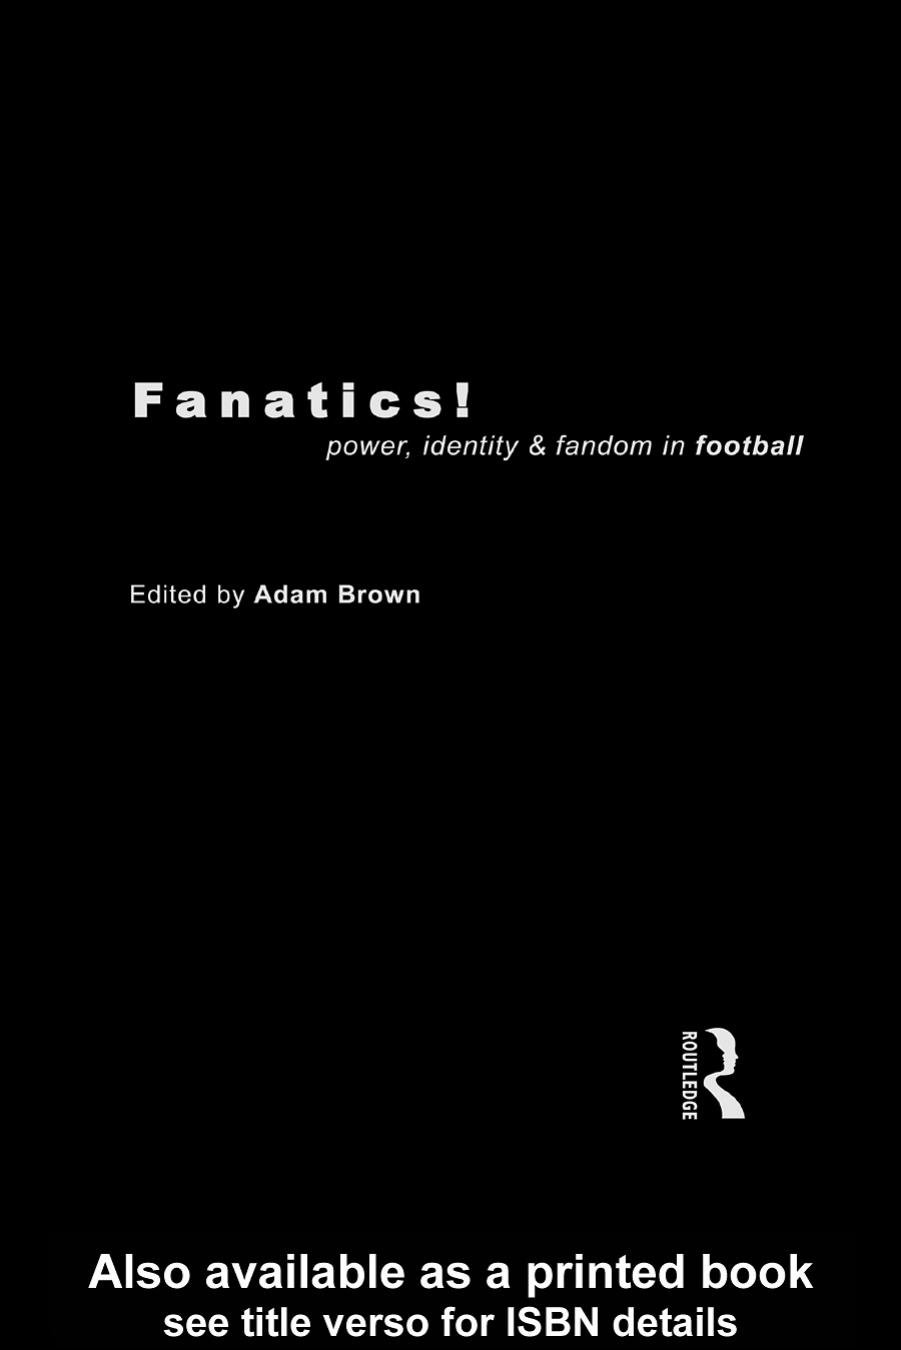 Fanatics!: Power, Identity and Fandom in Football by Adam Brown (edt)